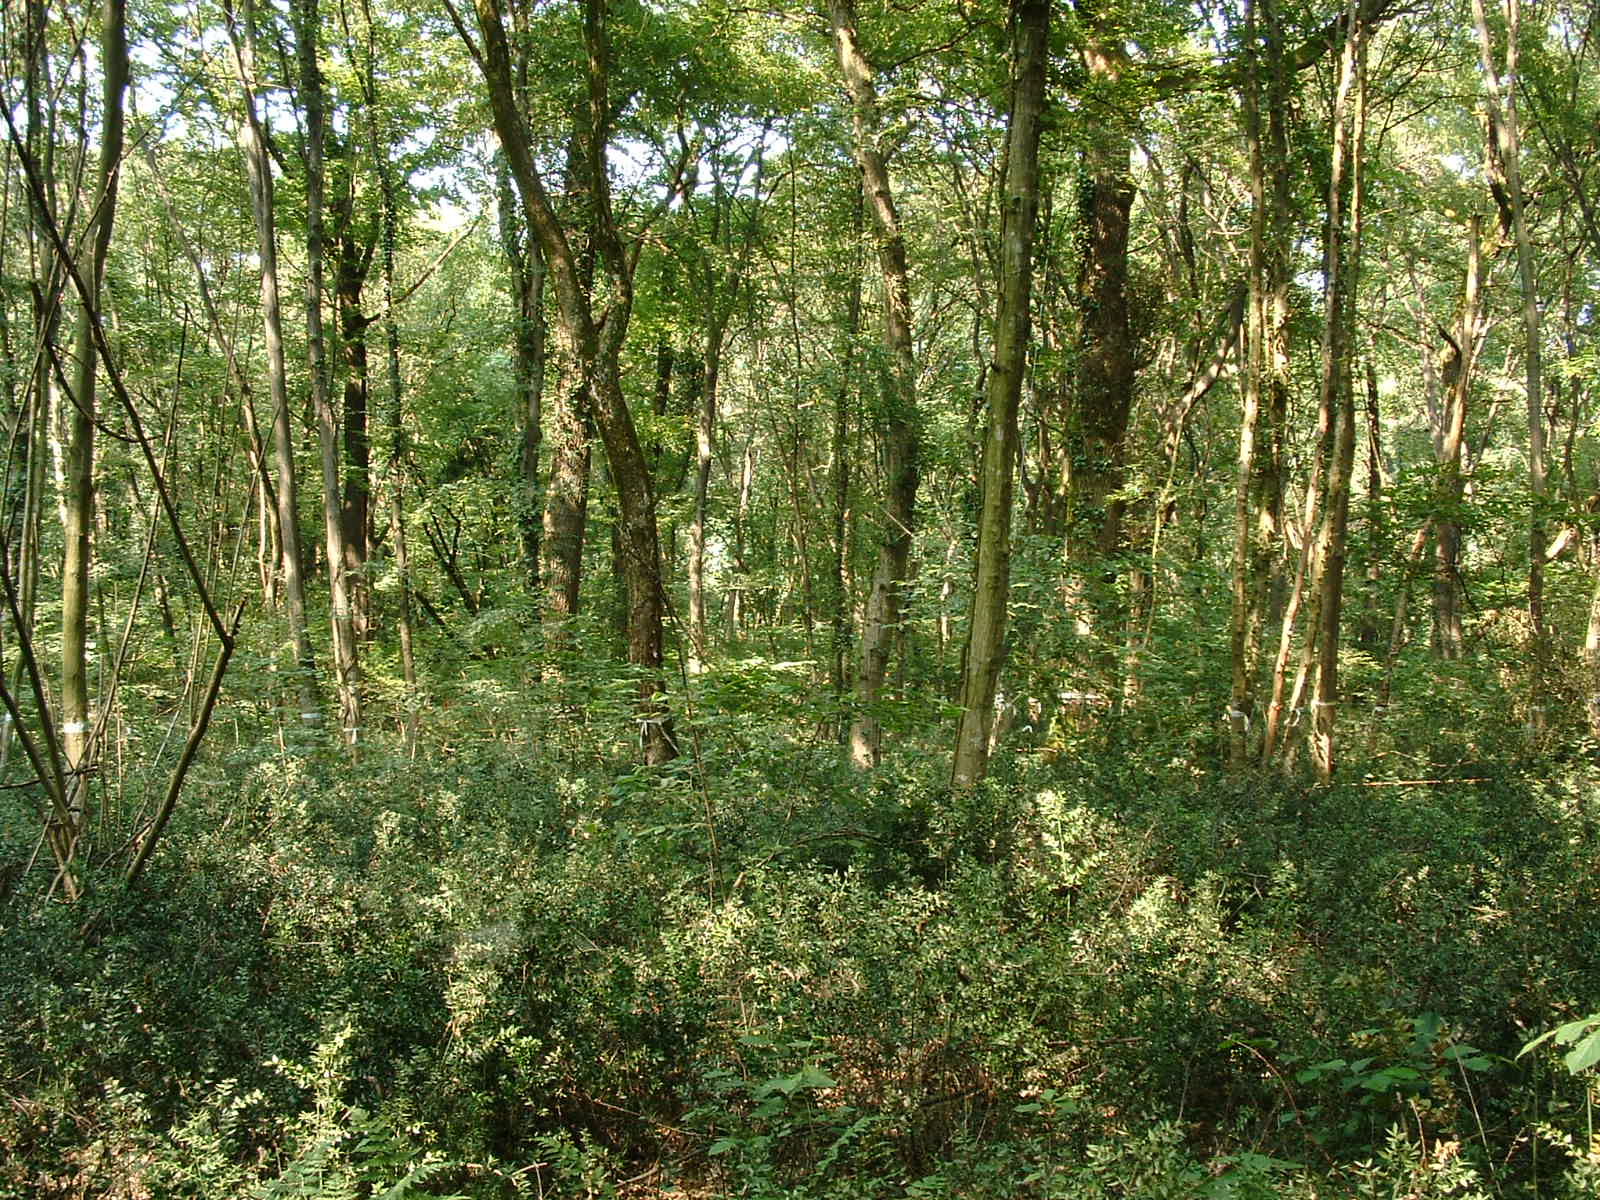 The oak-hornbeam forest (photo by S. Hardersen).